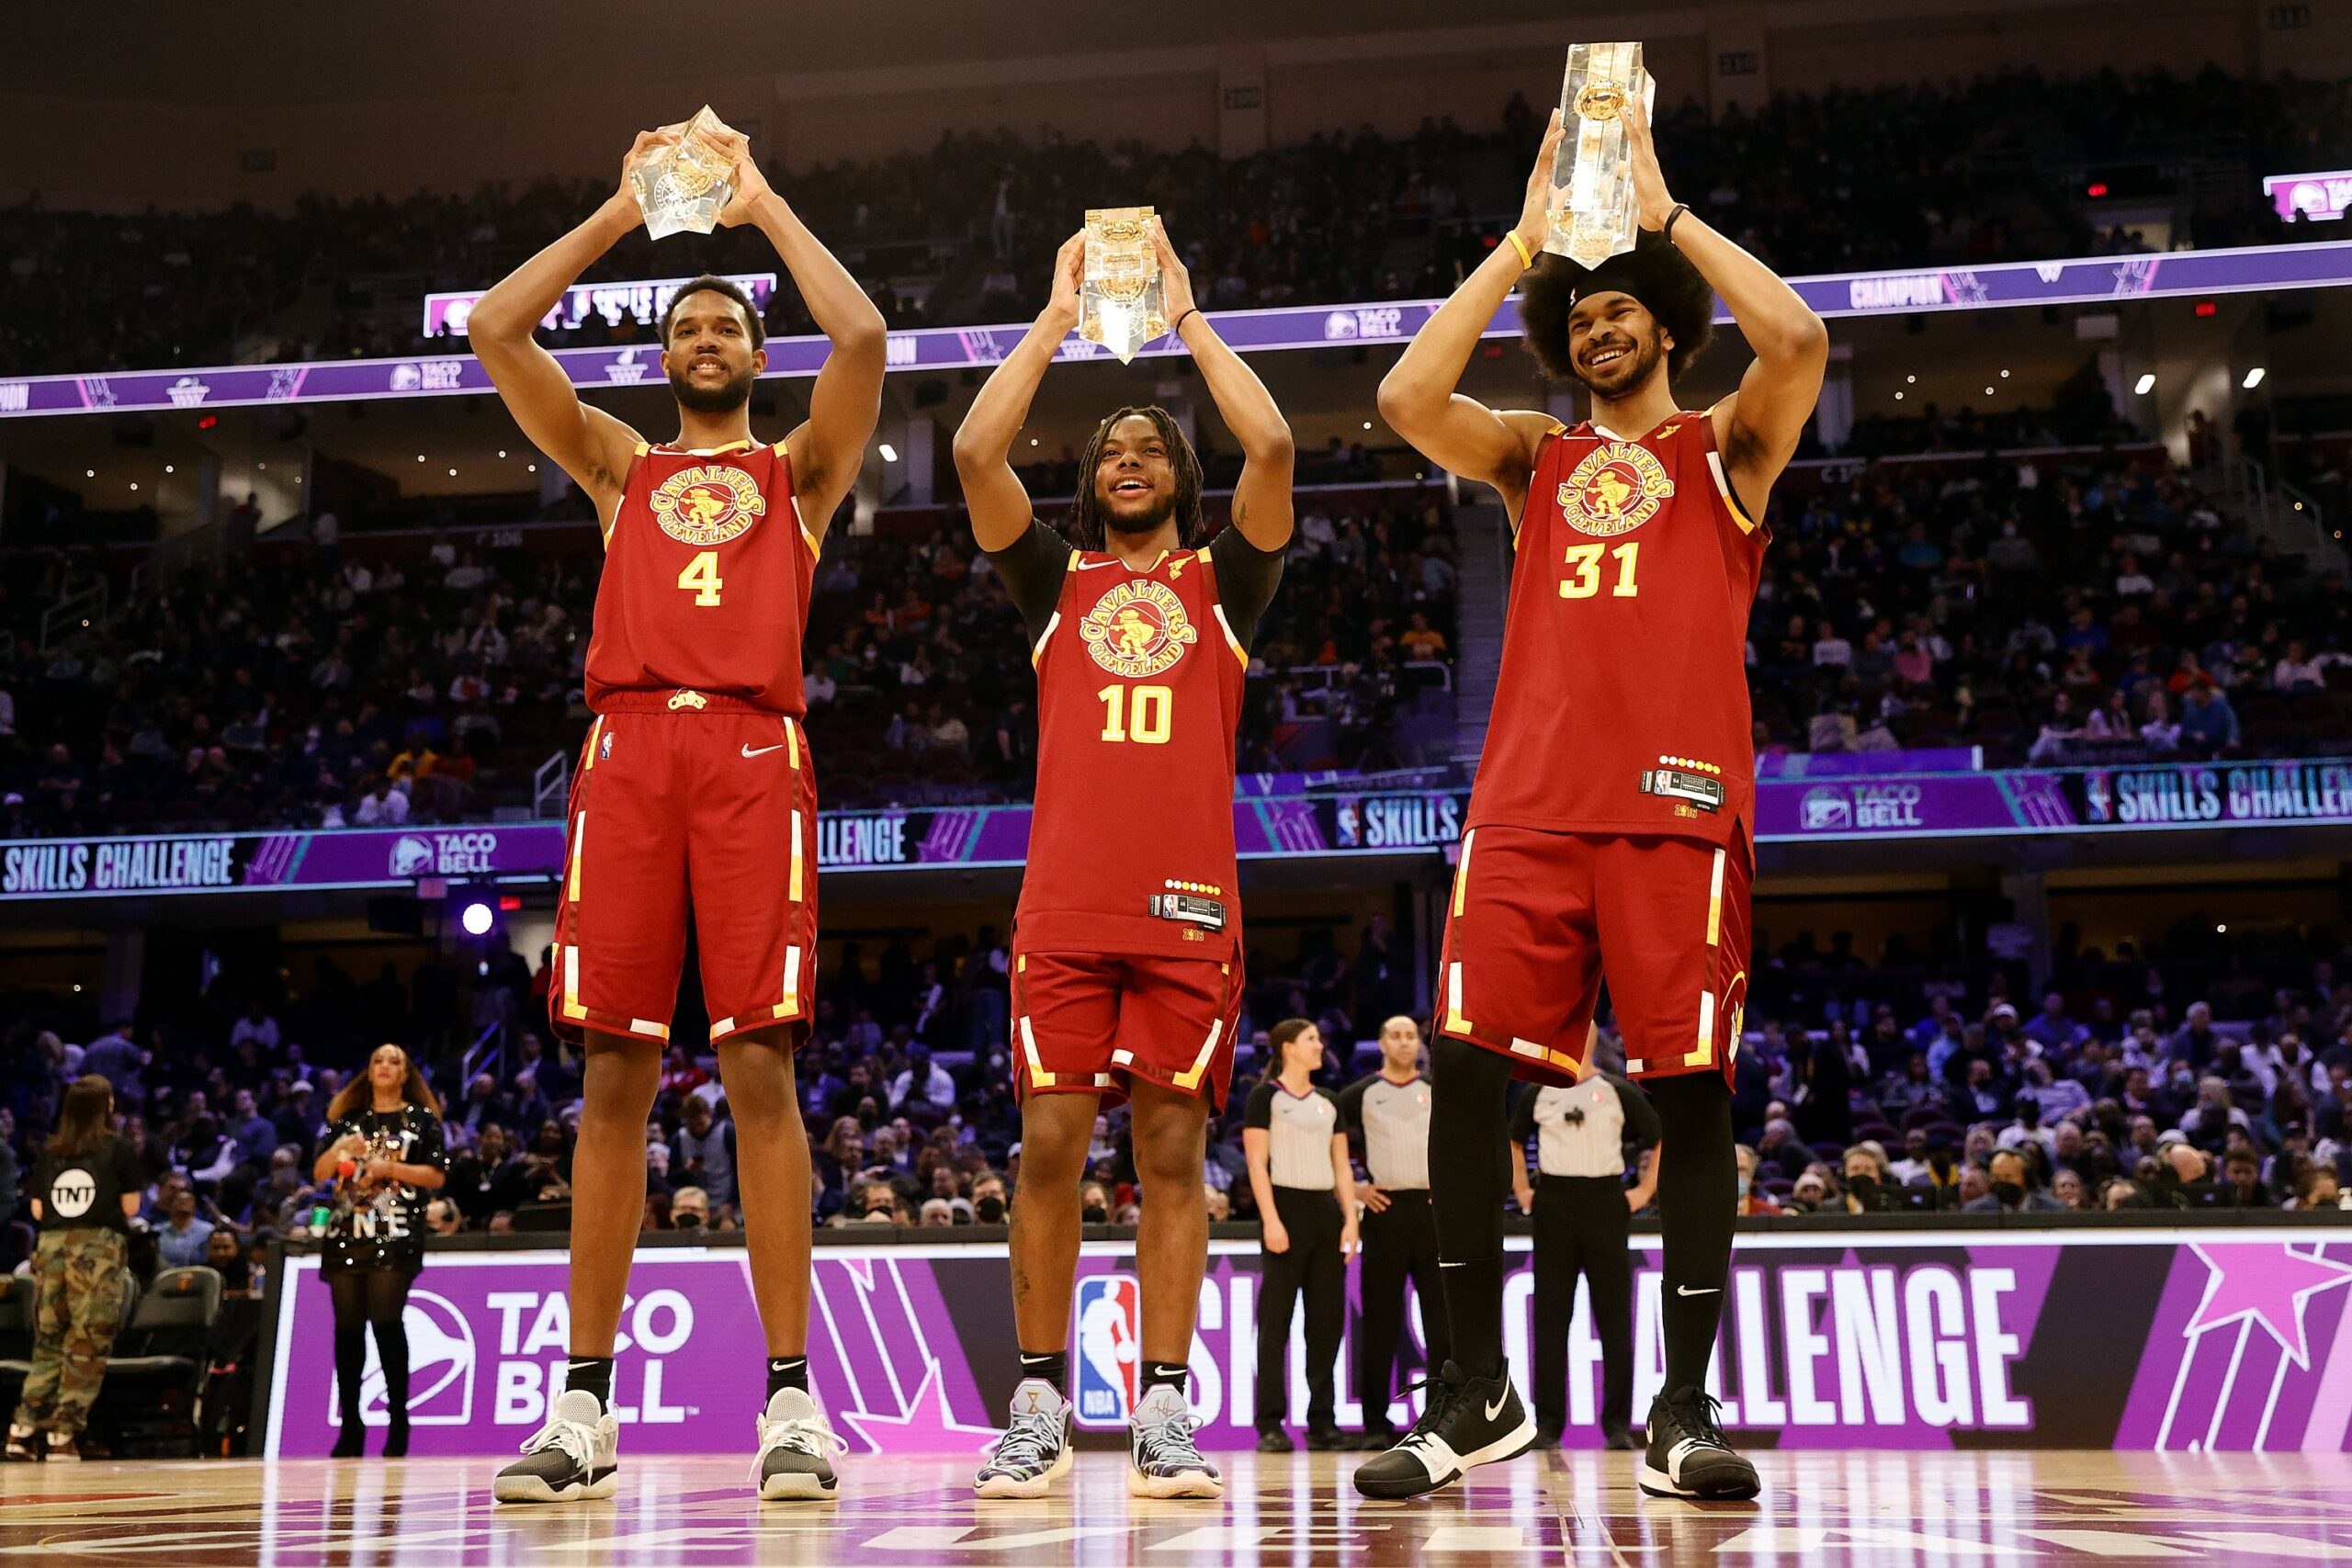 Team Cavs wins 2022 NBA All-star Skills Challenge